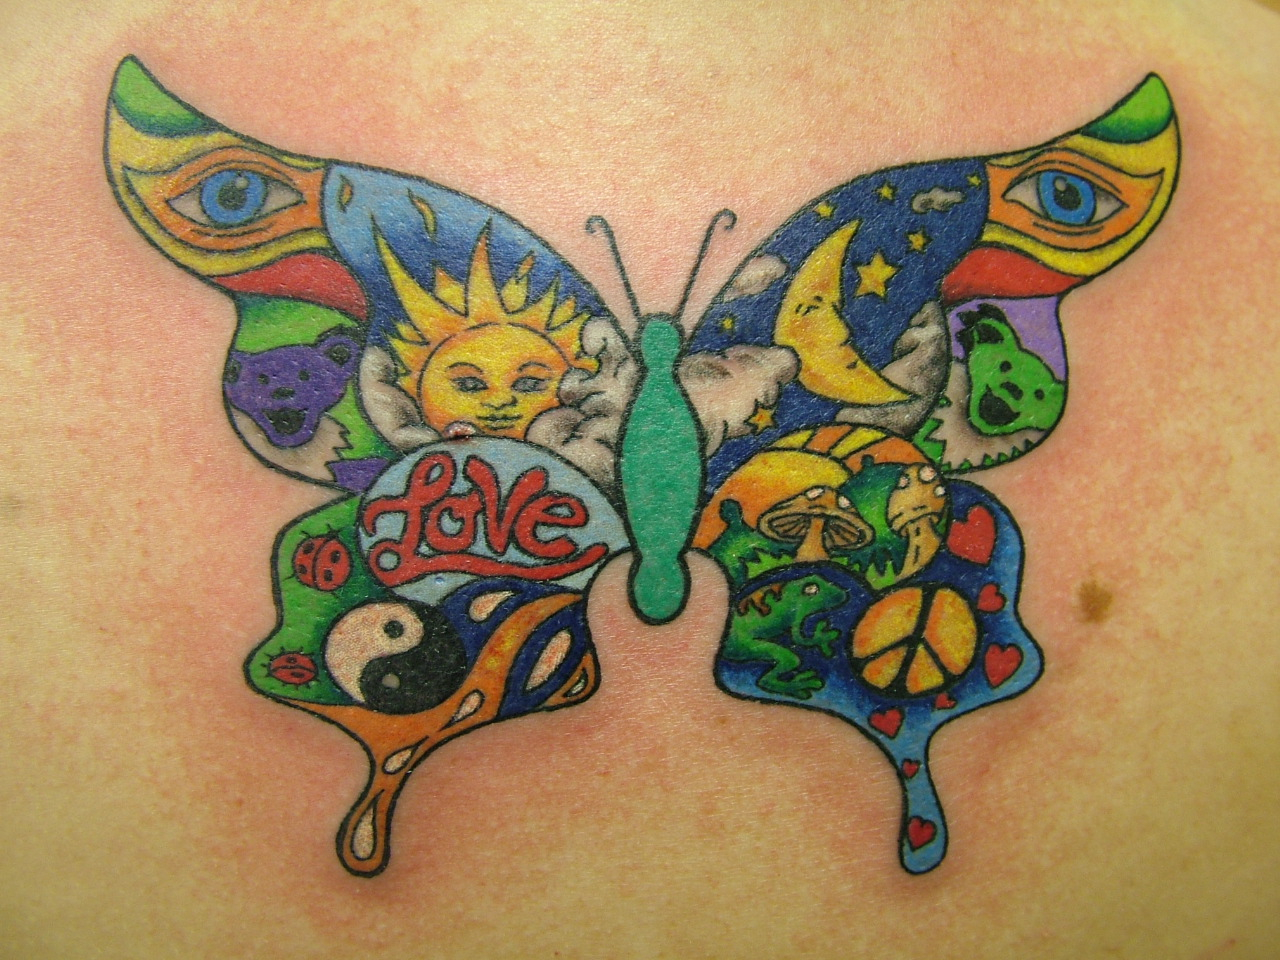 Cute Butterfly Tattoo In The Moon Tattoo Ideas inside dimensions 1280 X 960